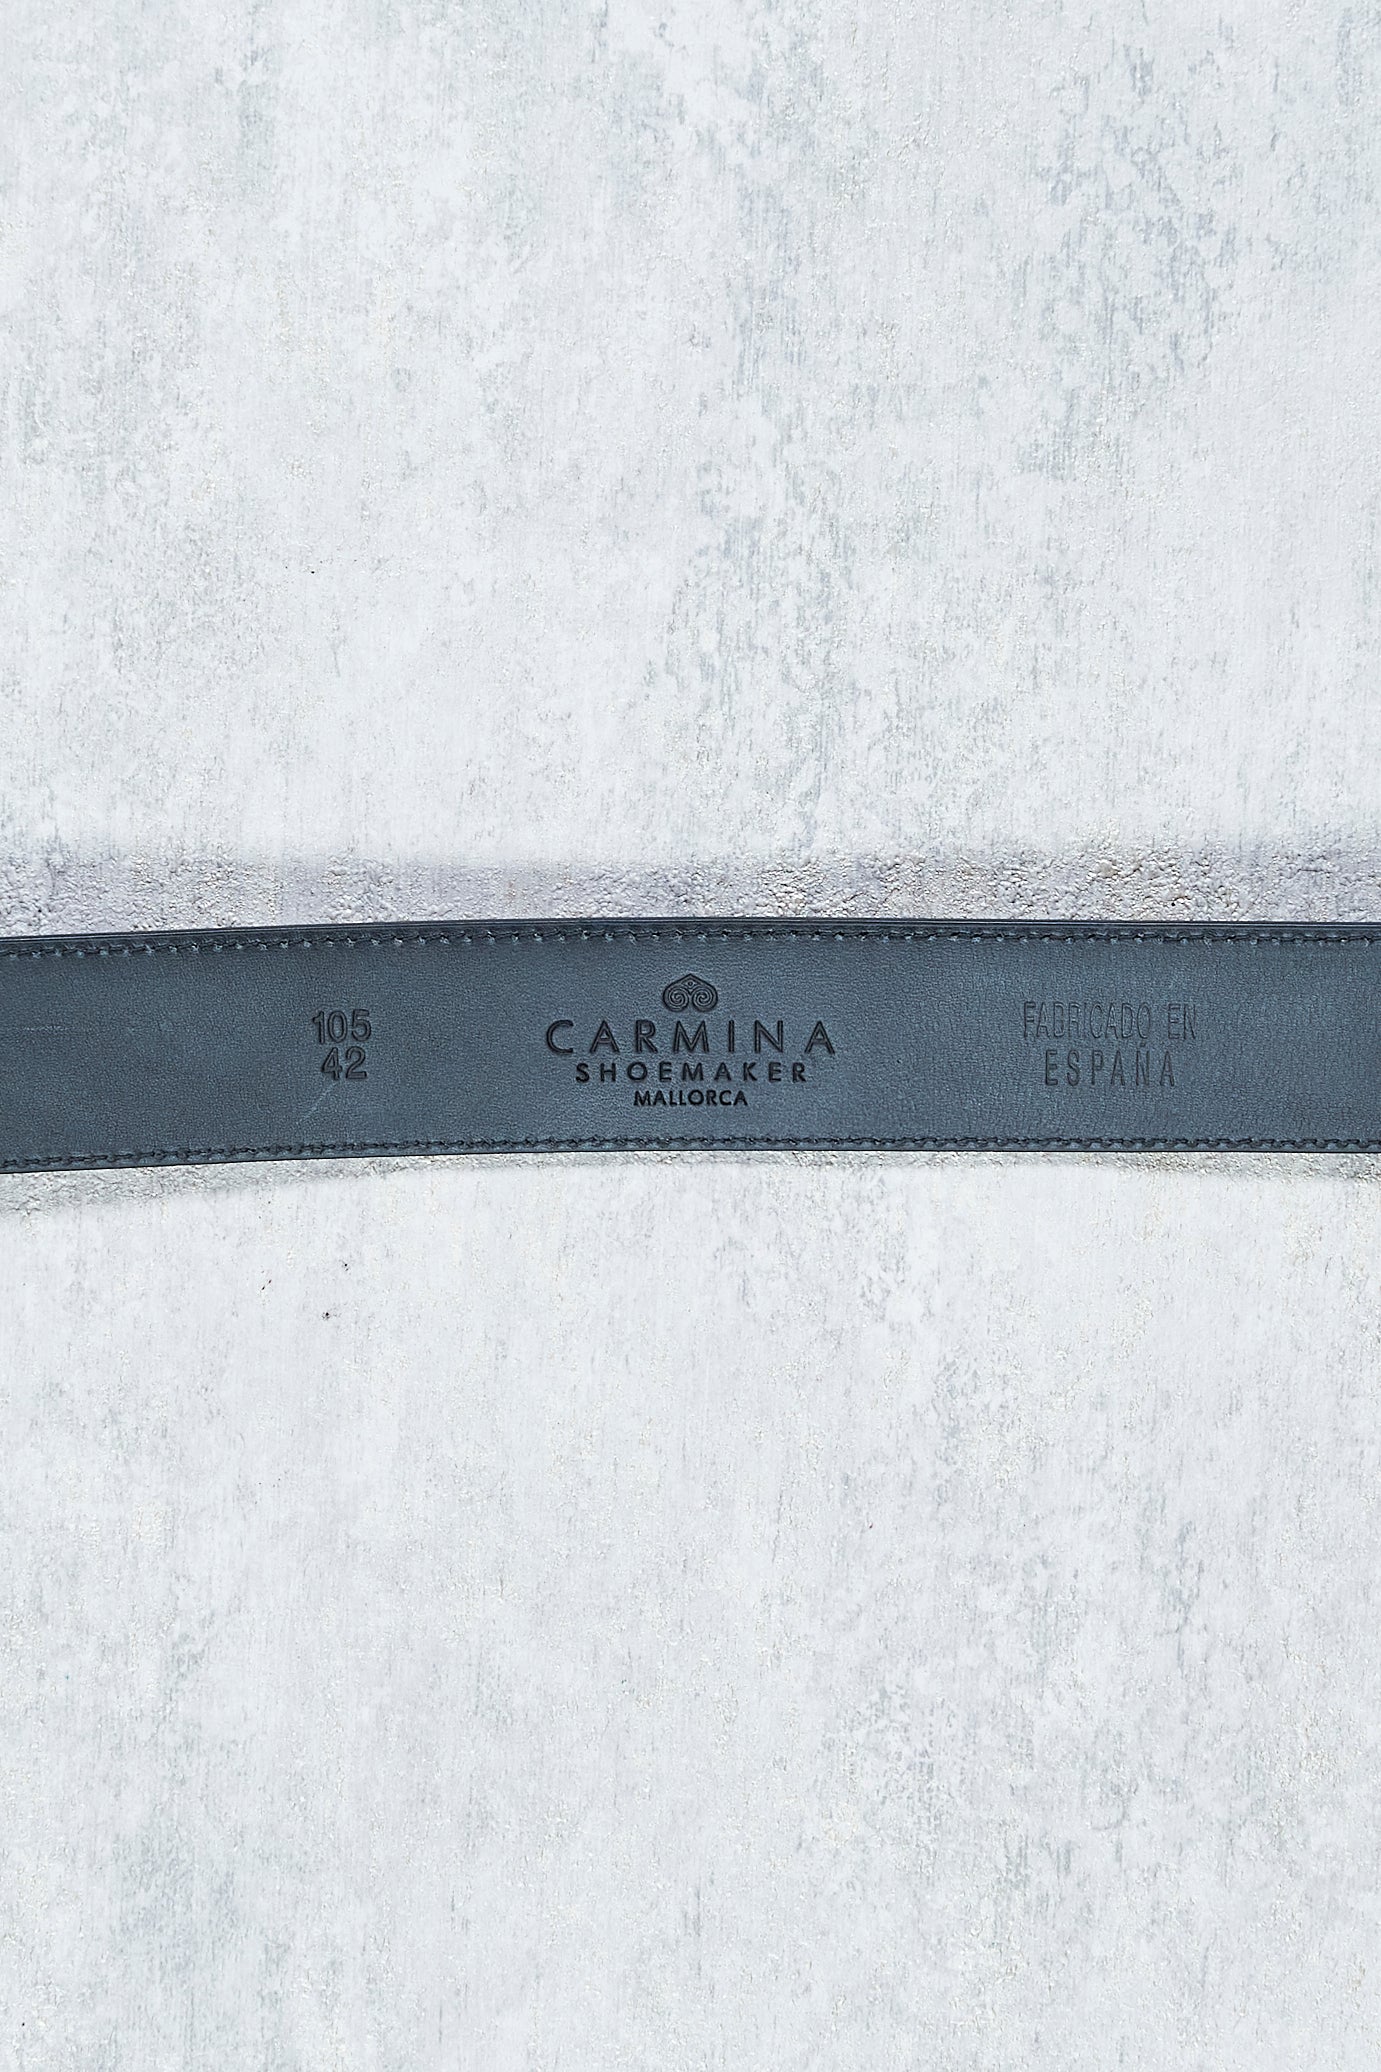 Carmina C02571-007-000 Burgundy Calf with Gold Buckle Belt